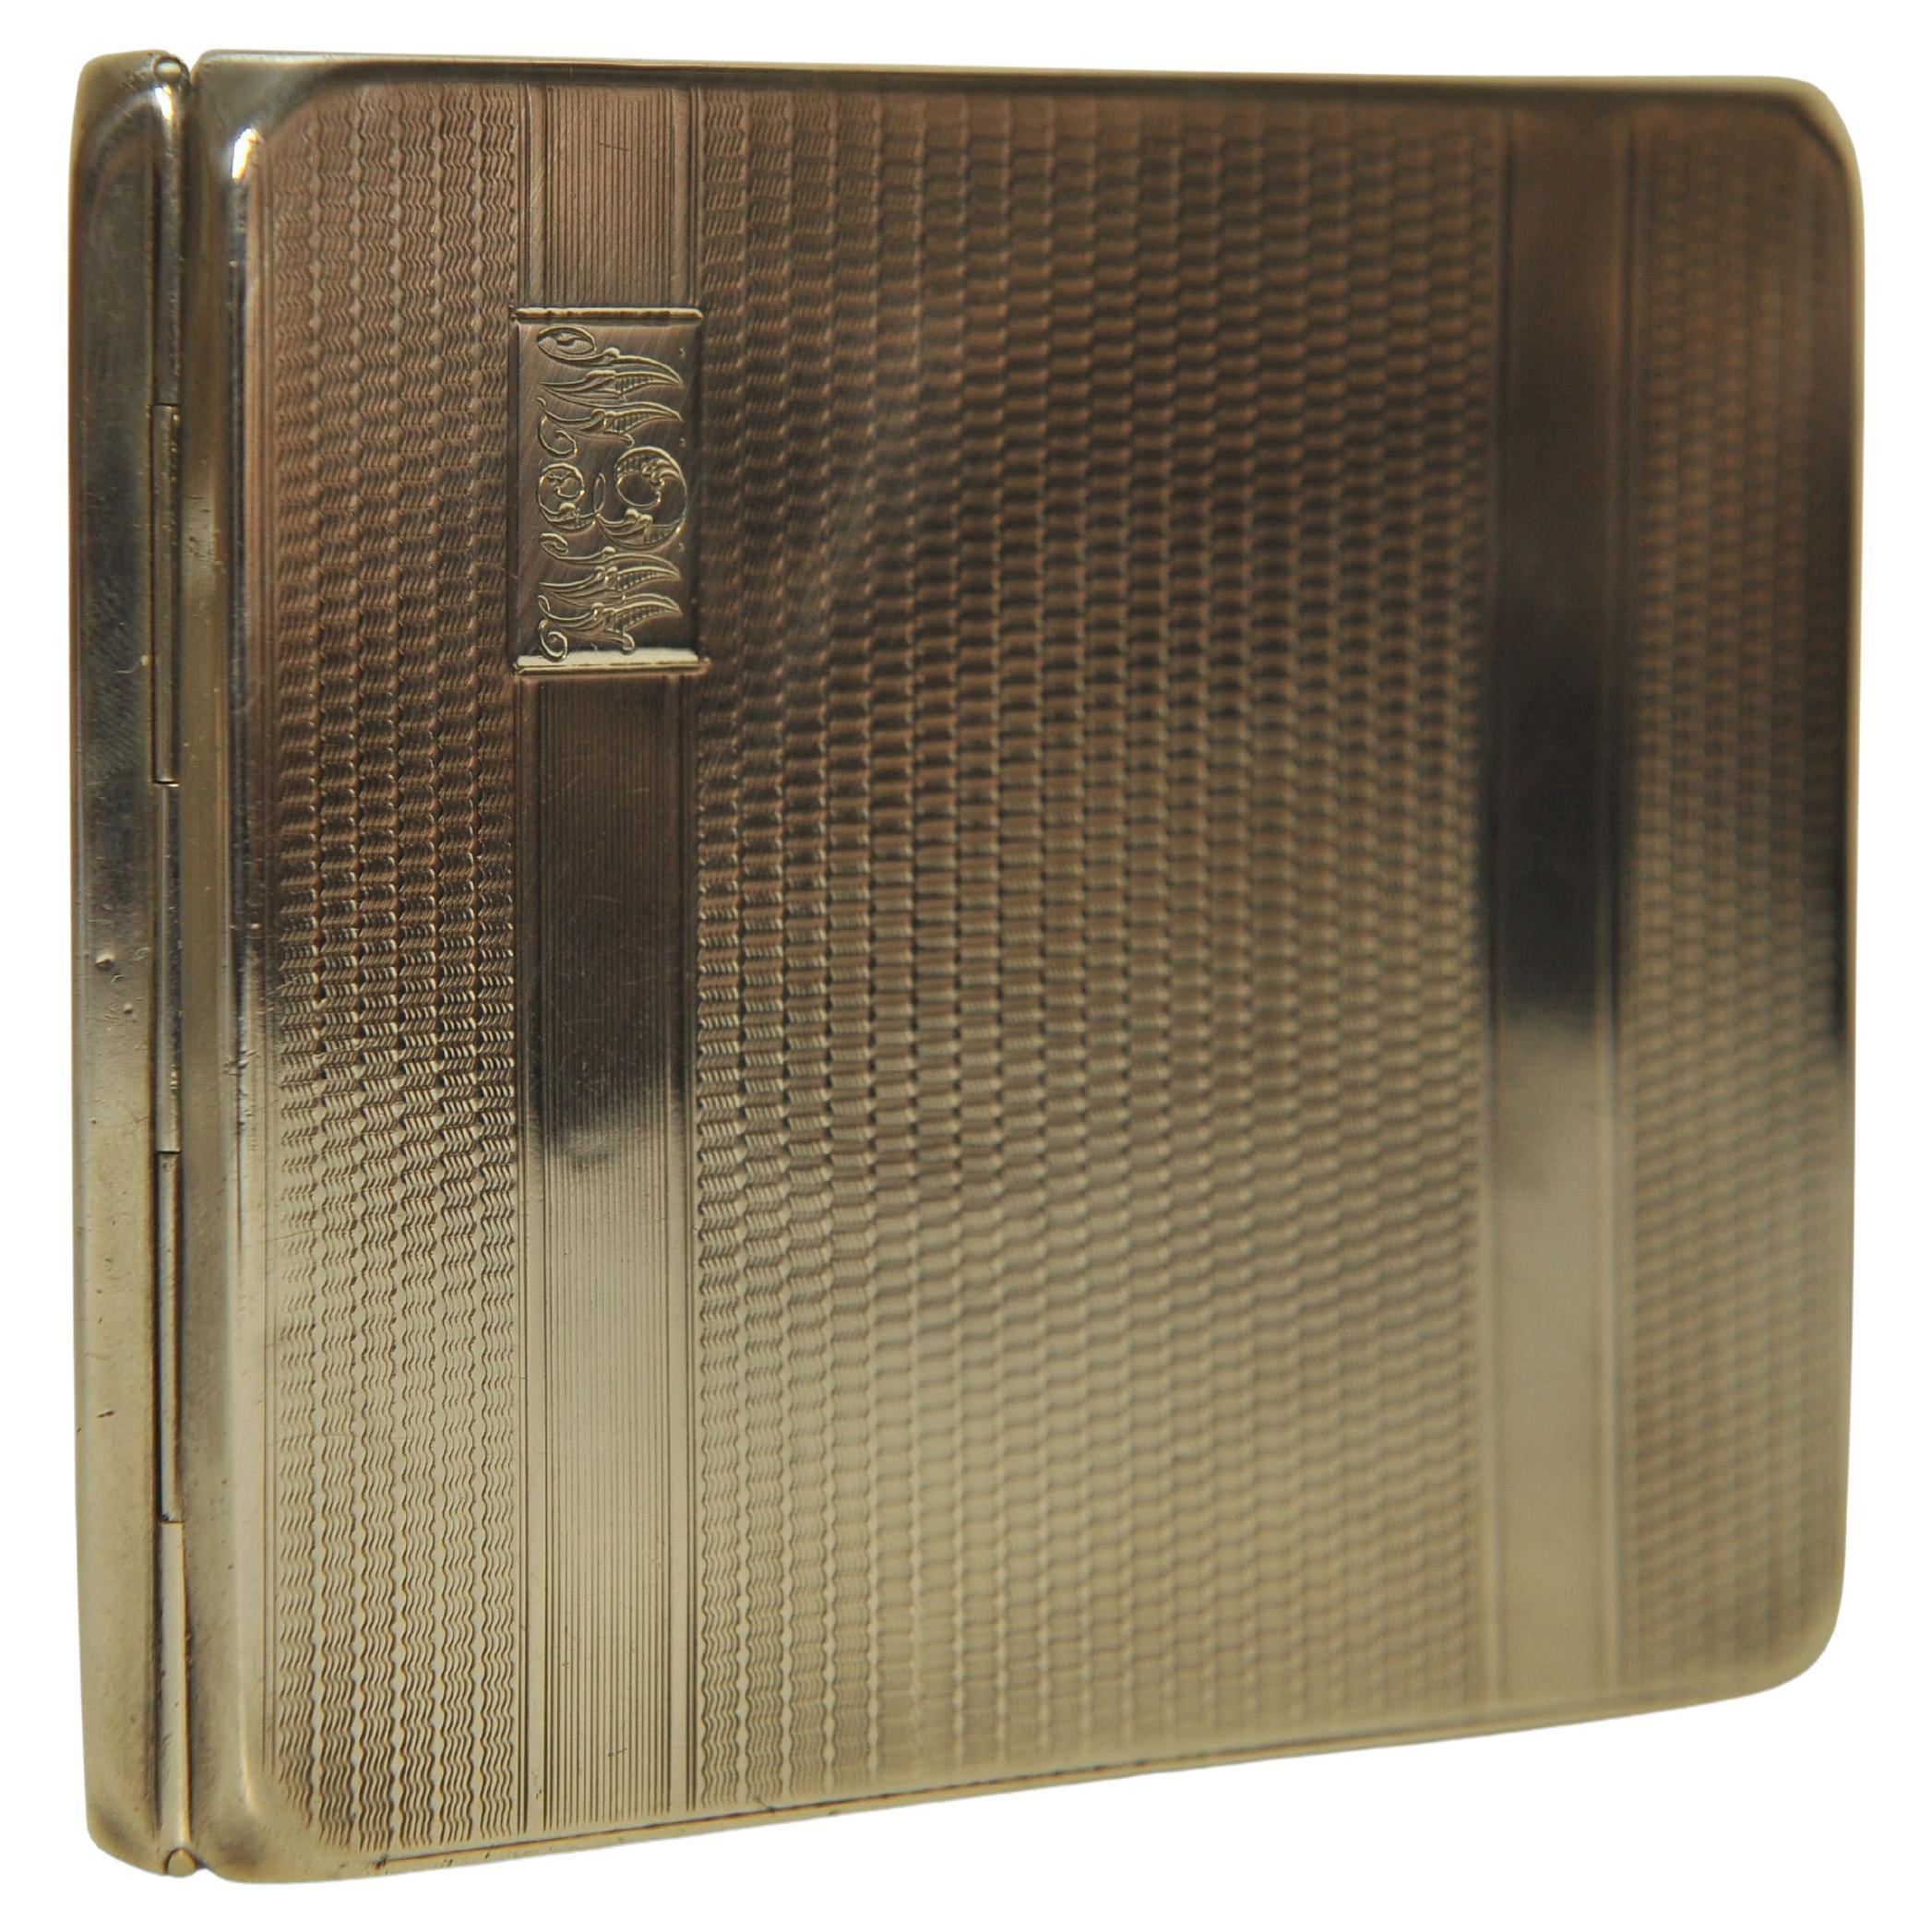 Elegant Art Deco Sterling Silver Engraved Cigarette Case By Renowned British SilverSmiths Harman Bros. Birmingham 1931. Weight 129grams

Hallmarked H BROS Birmingham Hallmark G
Ideal Christmas or Father's Day Present

